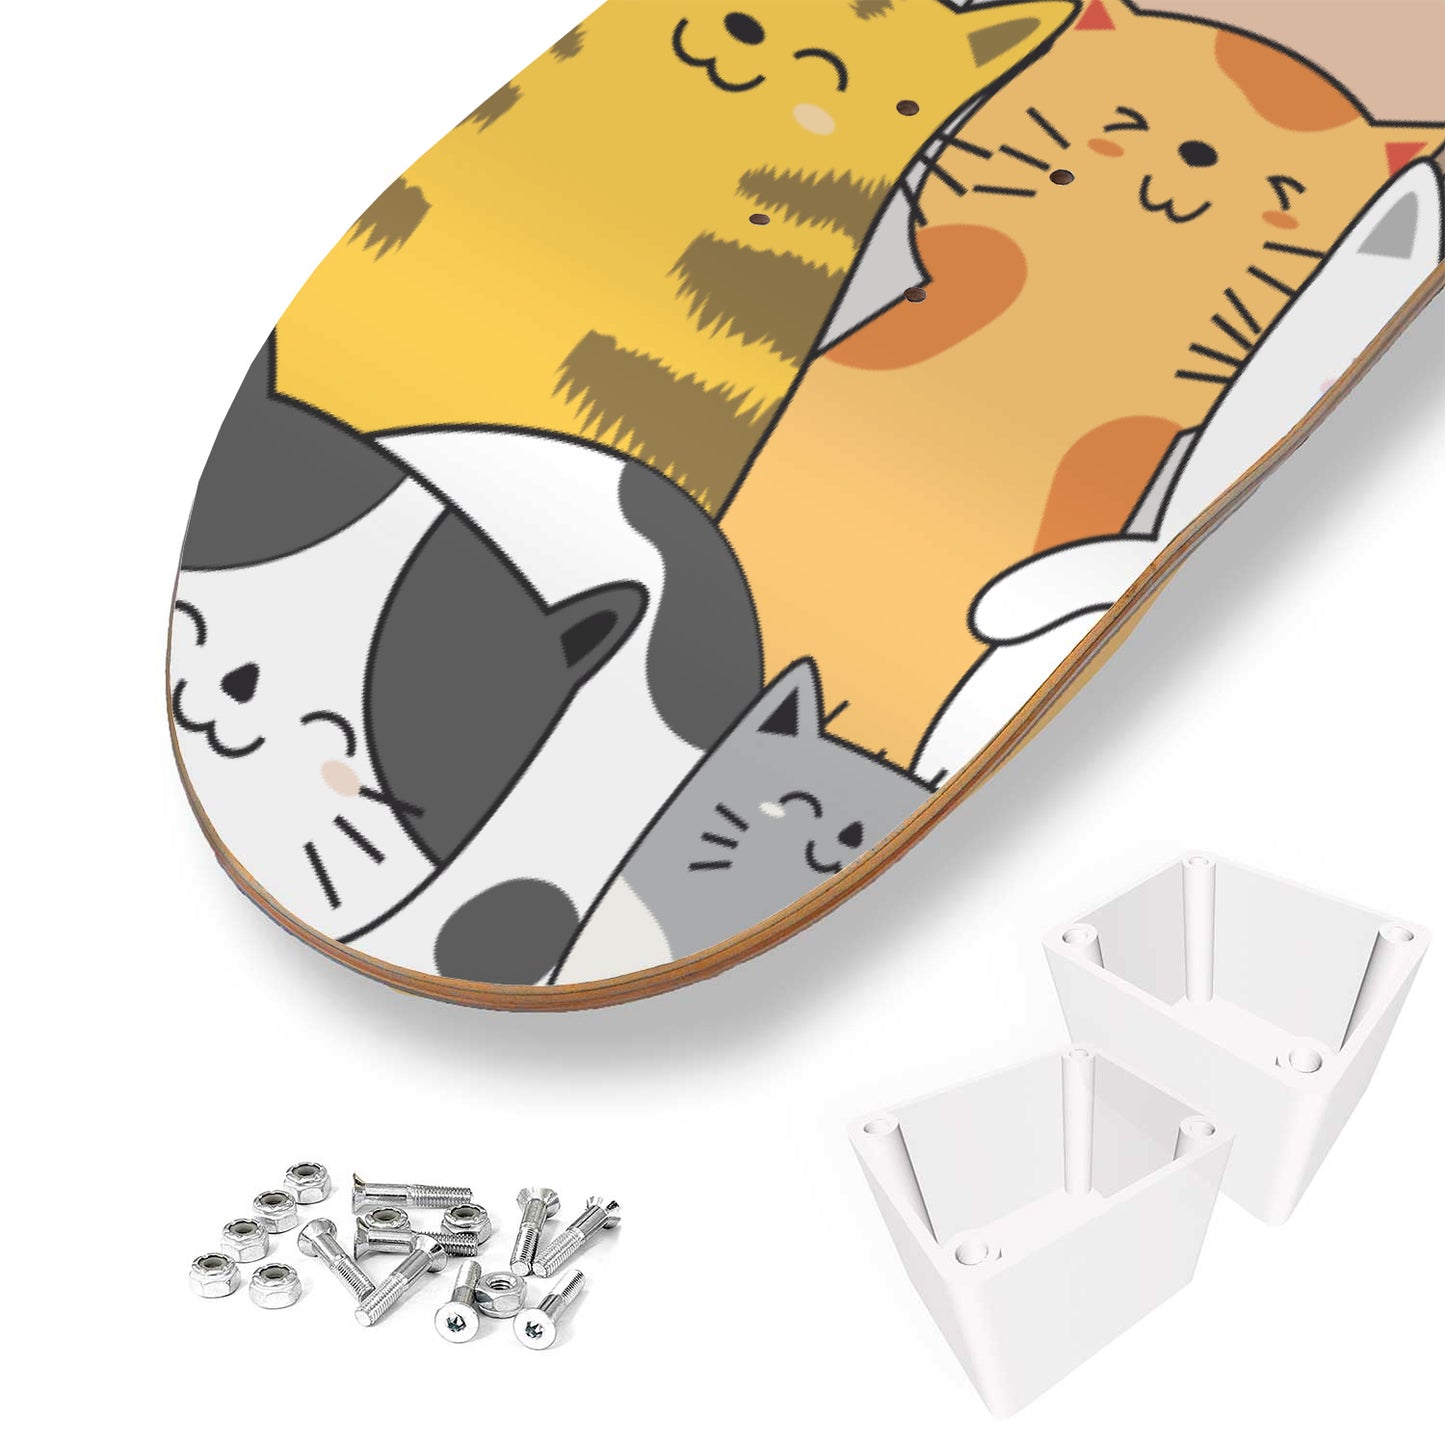 Cute Cartoon Cat Inspired -'Kawaii kitties' -Skateboard Wall Art